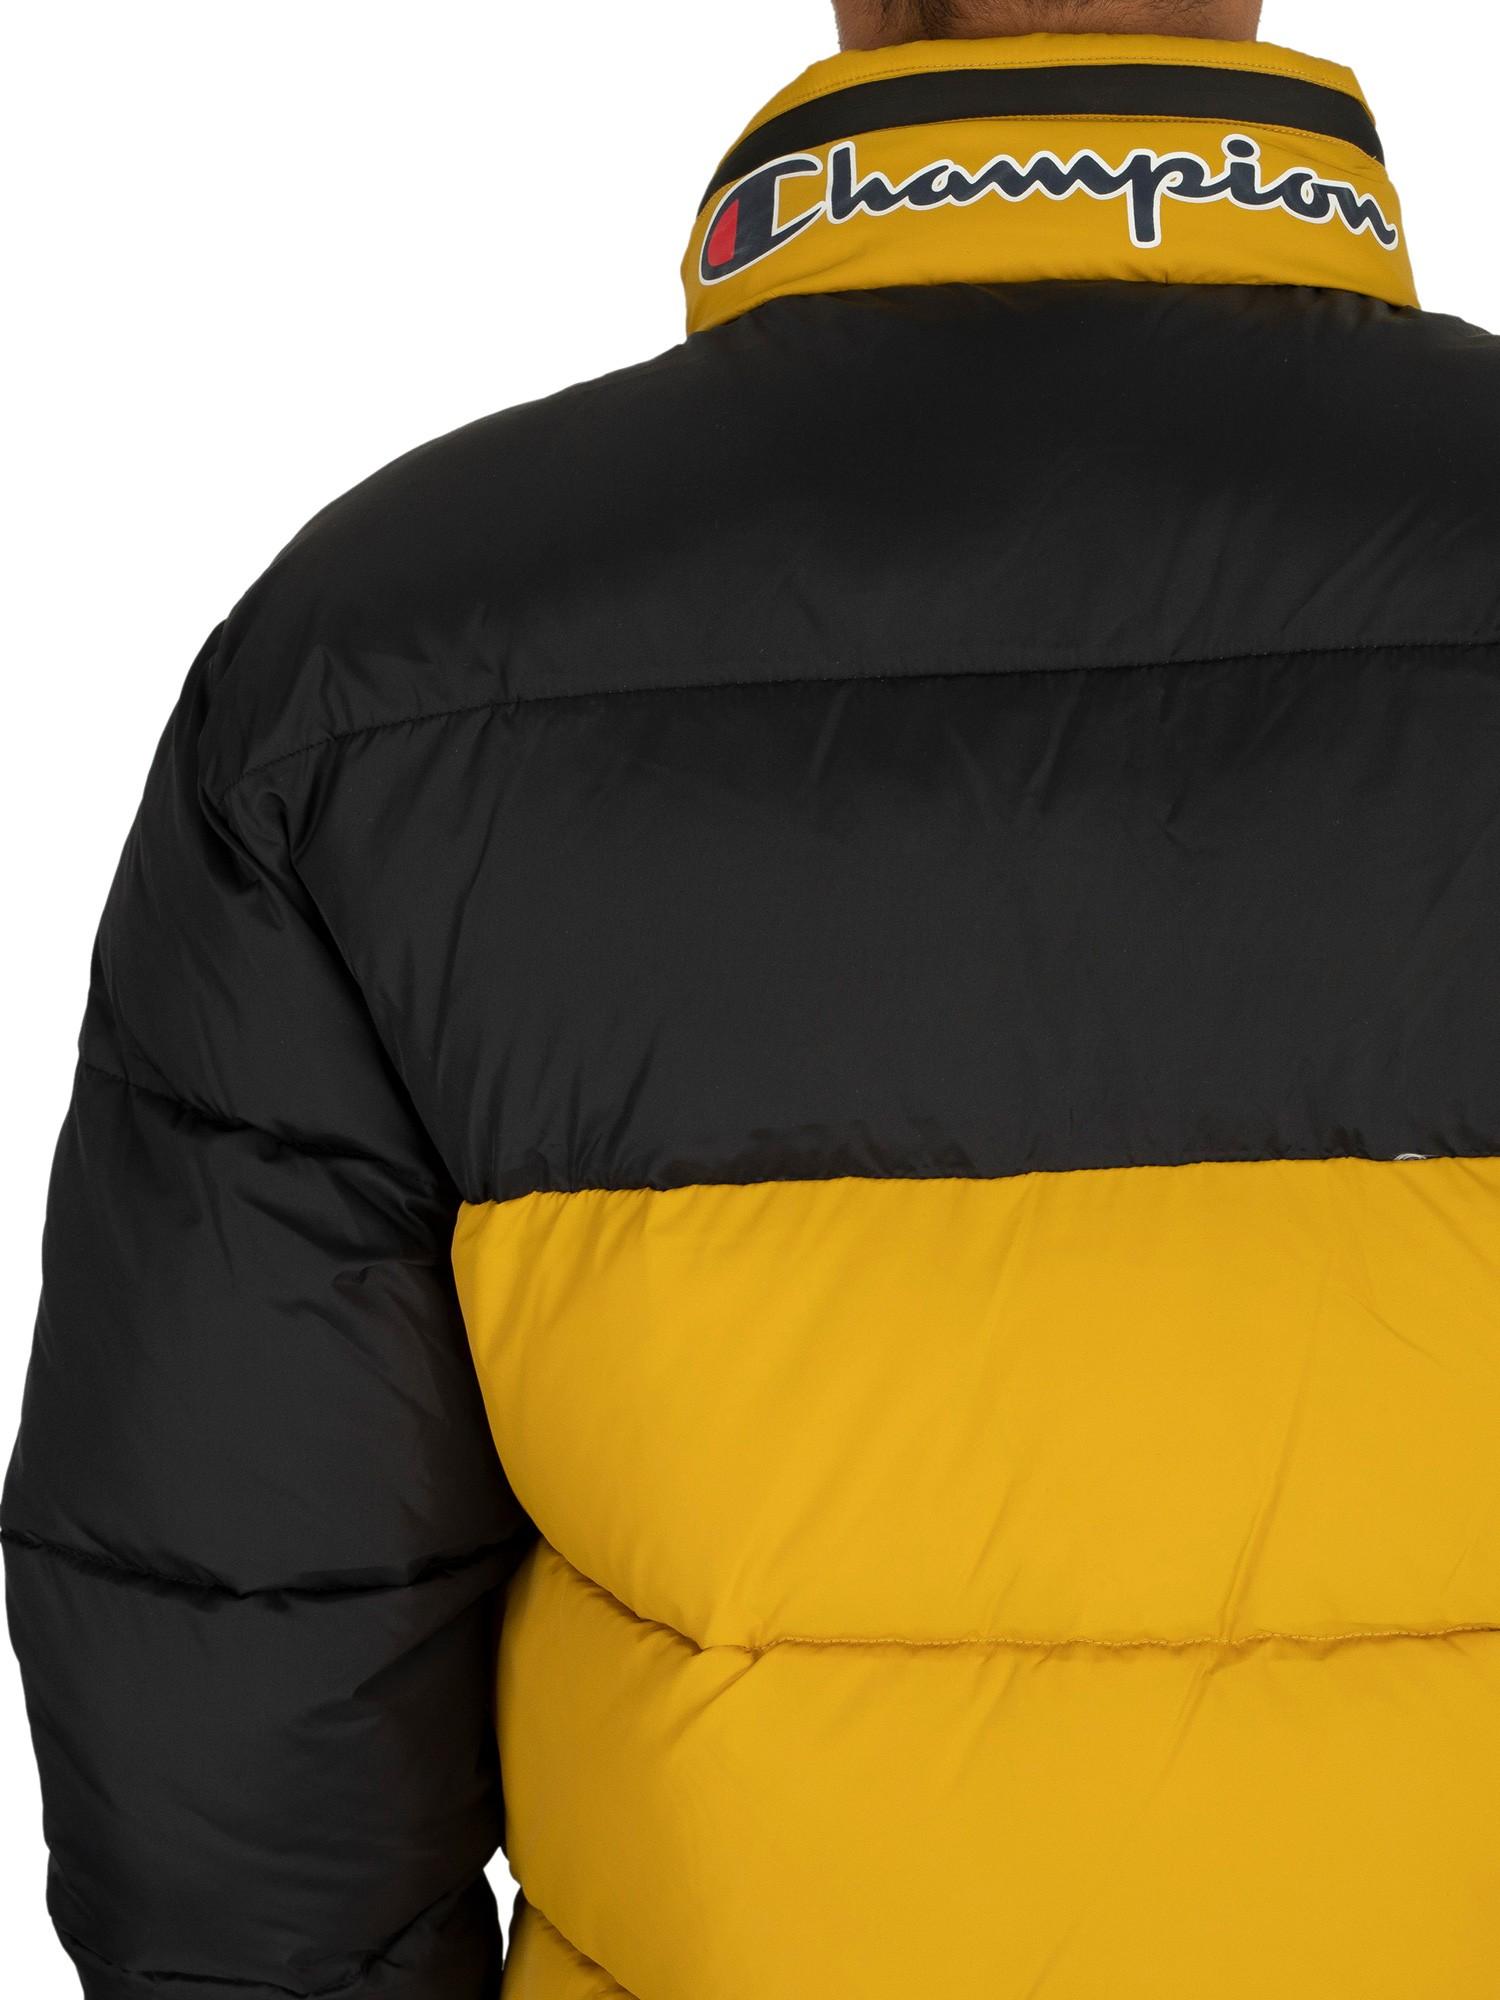 stilhed periode fyrværkeri Champion Men's Puffer Jacket, Yellow Men's Jacket In Yellow for Men - Lyst